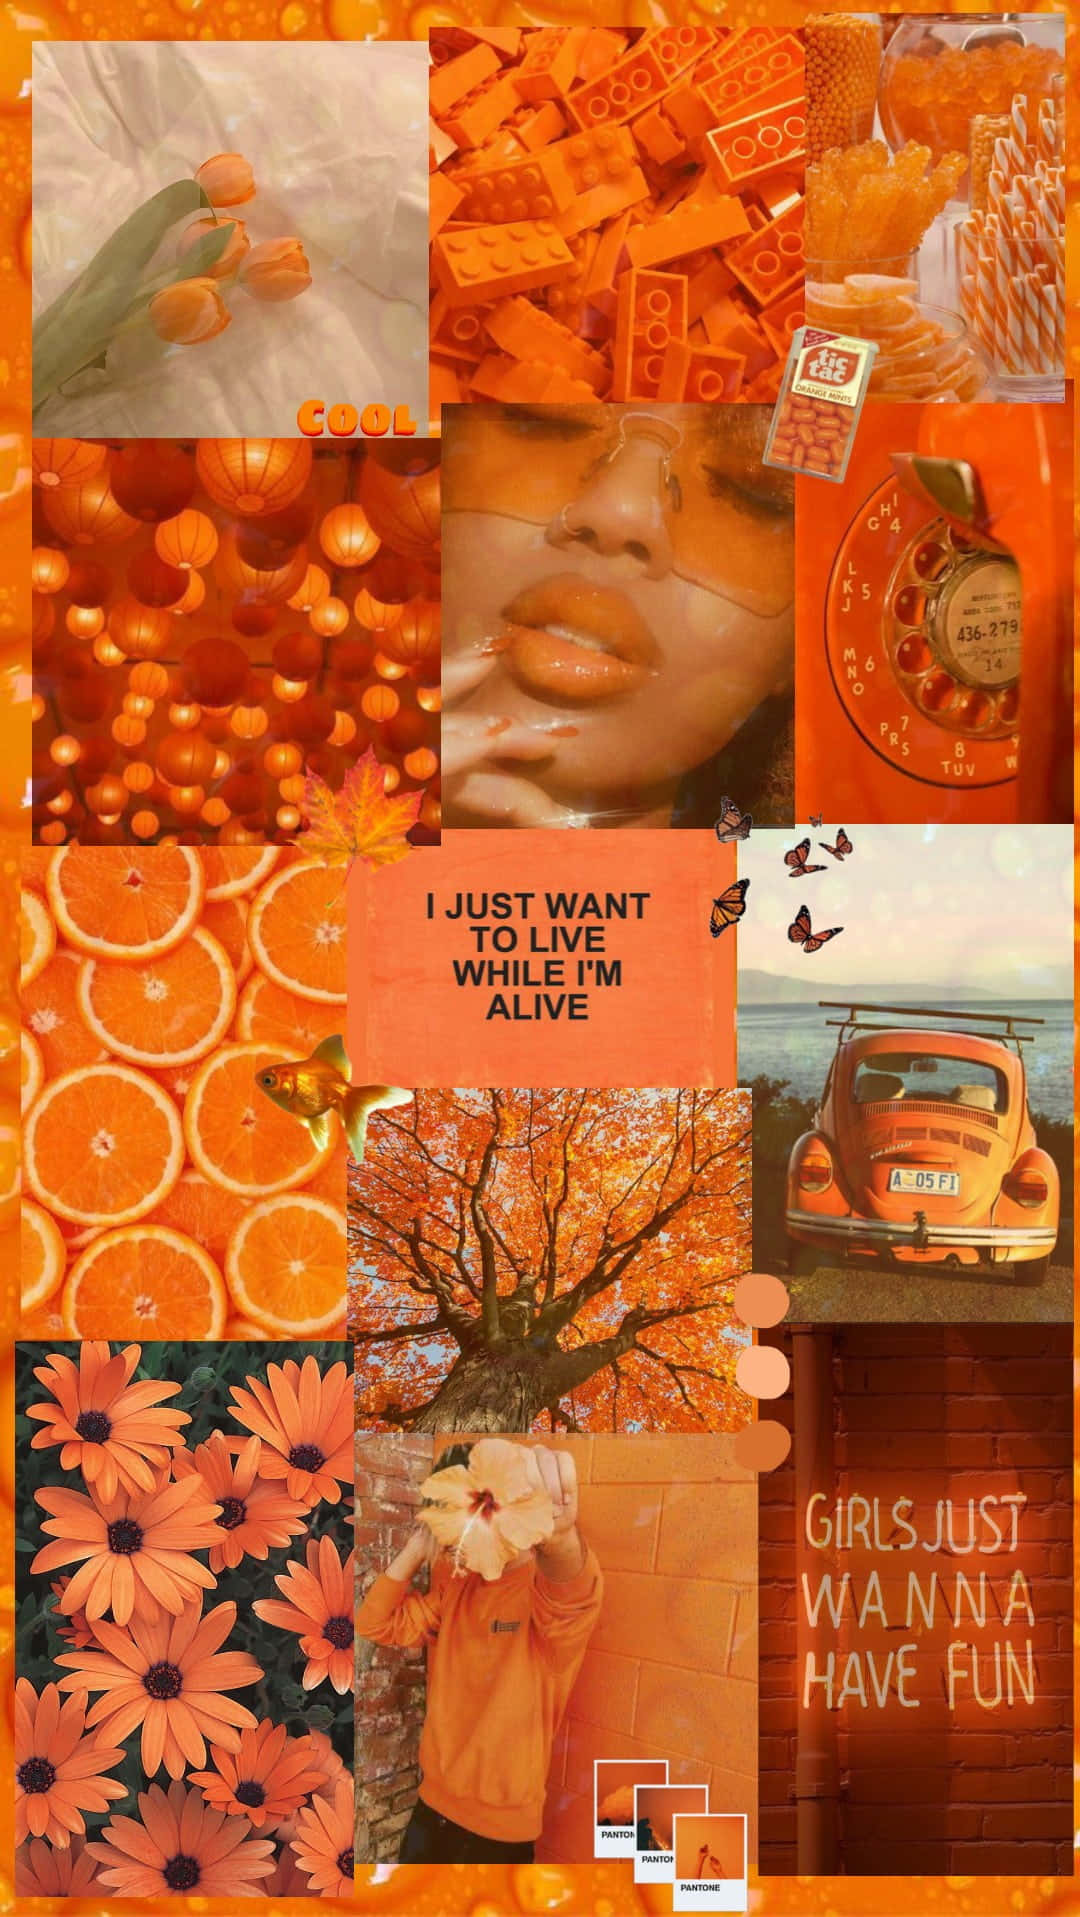 Start fresh with a vibrant orange aesthetic